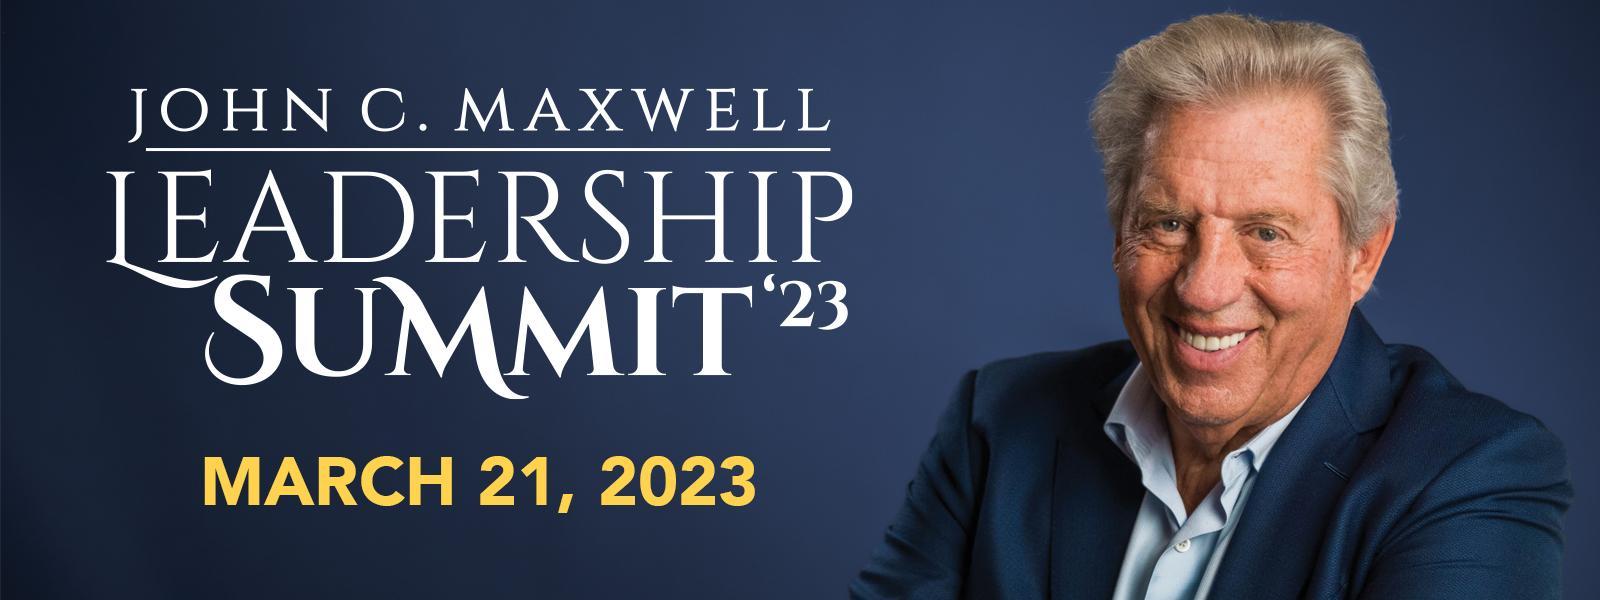 Register for the Leadership Summit at CIU.edu/Maxwell.